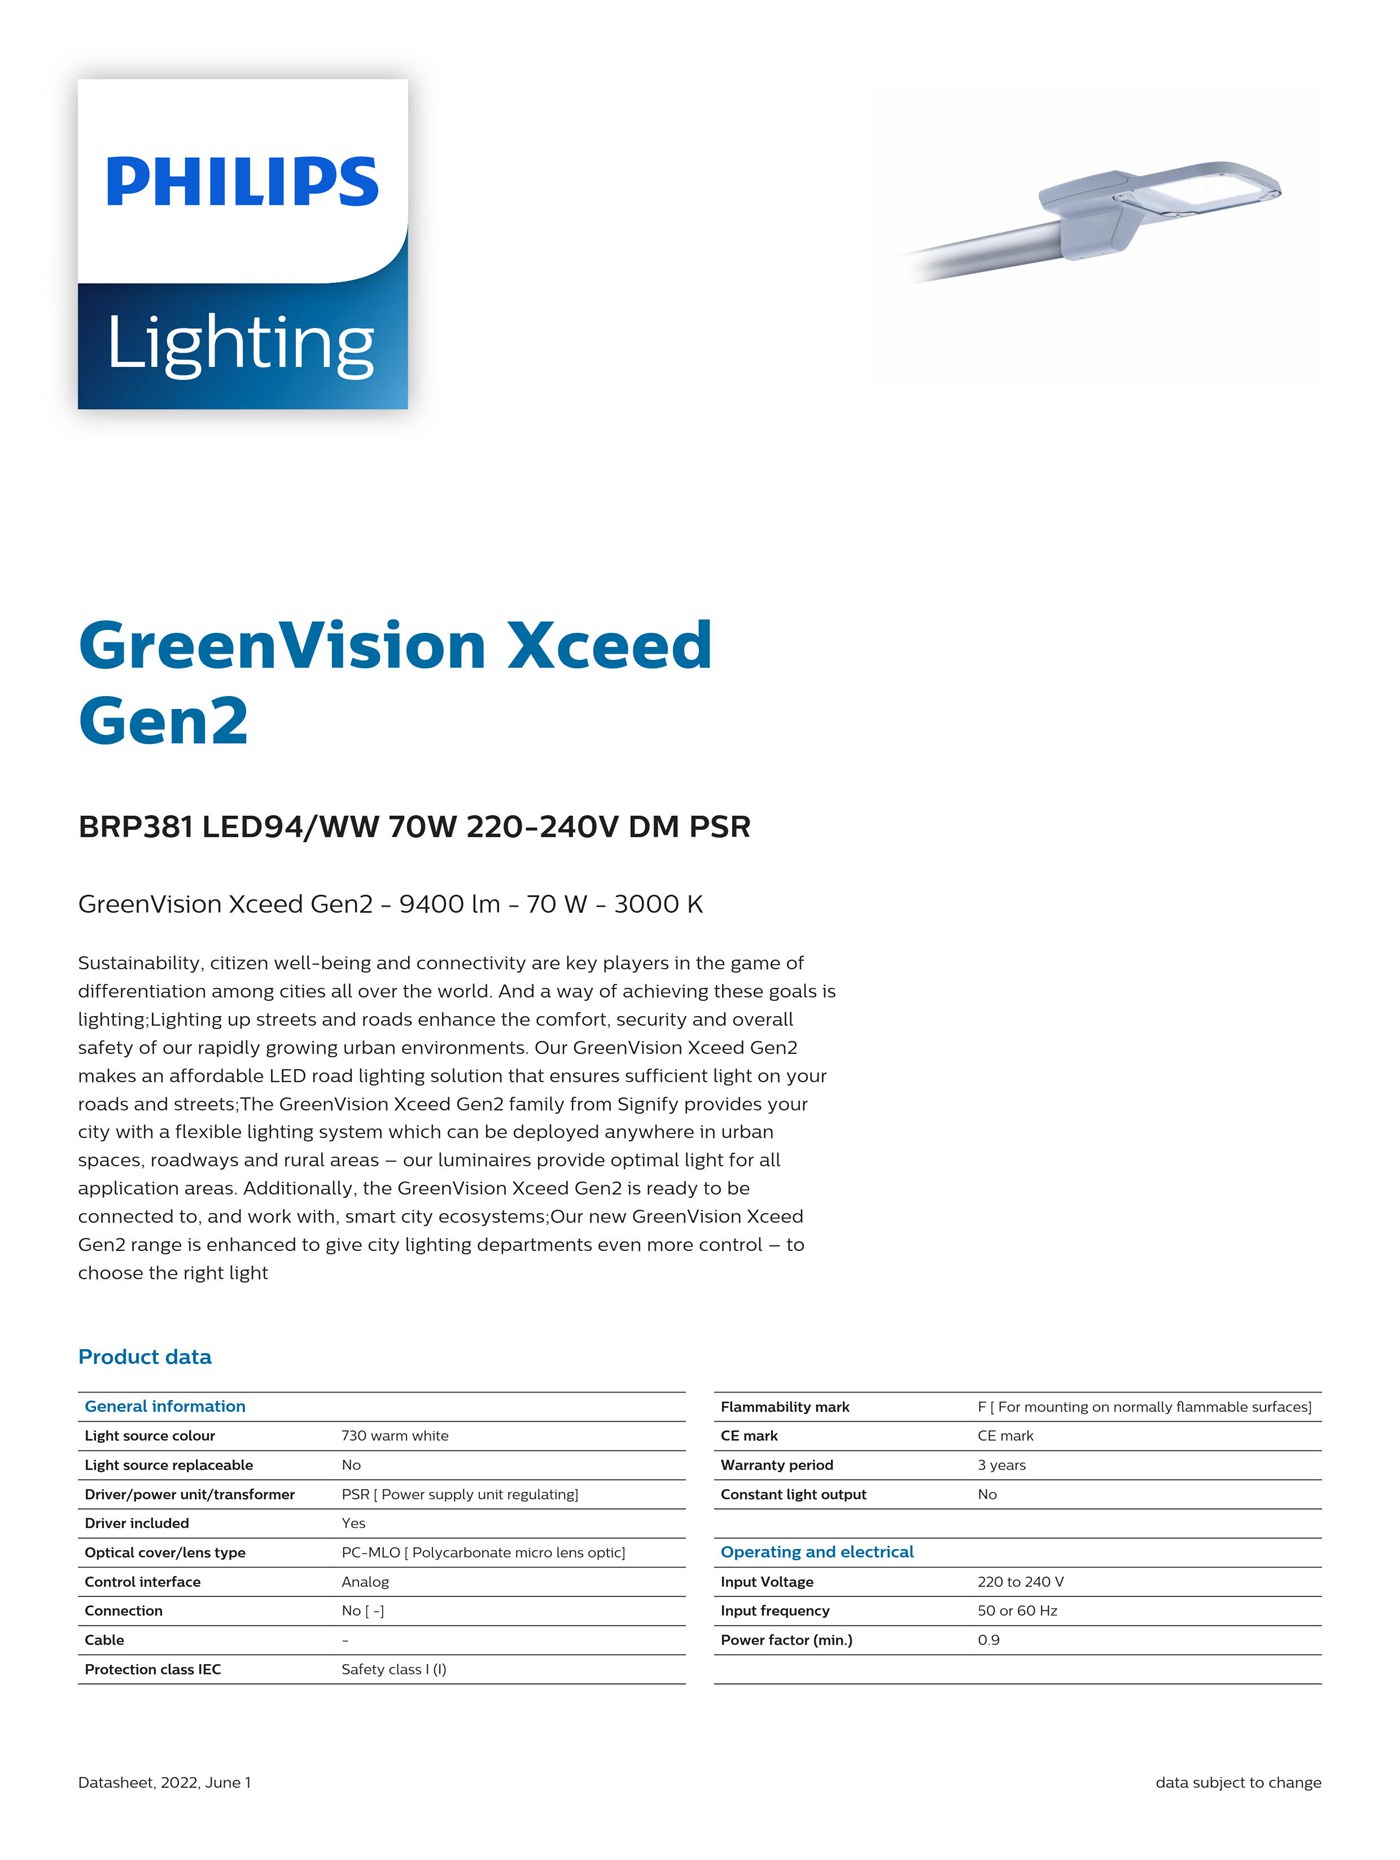 PHILIPS GreenVision Xceed Gen2 BRP381 LED94/WW 70W 220-240V DM PSR 911401877998